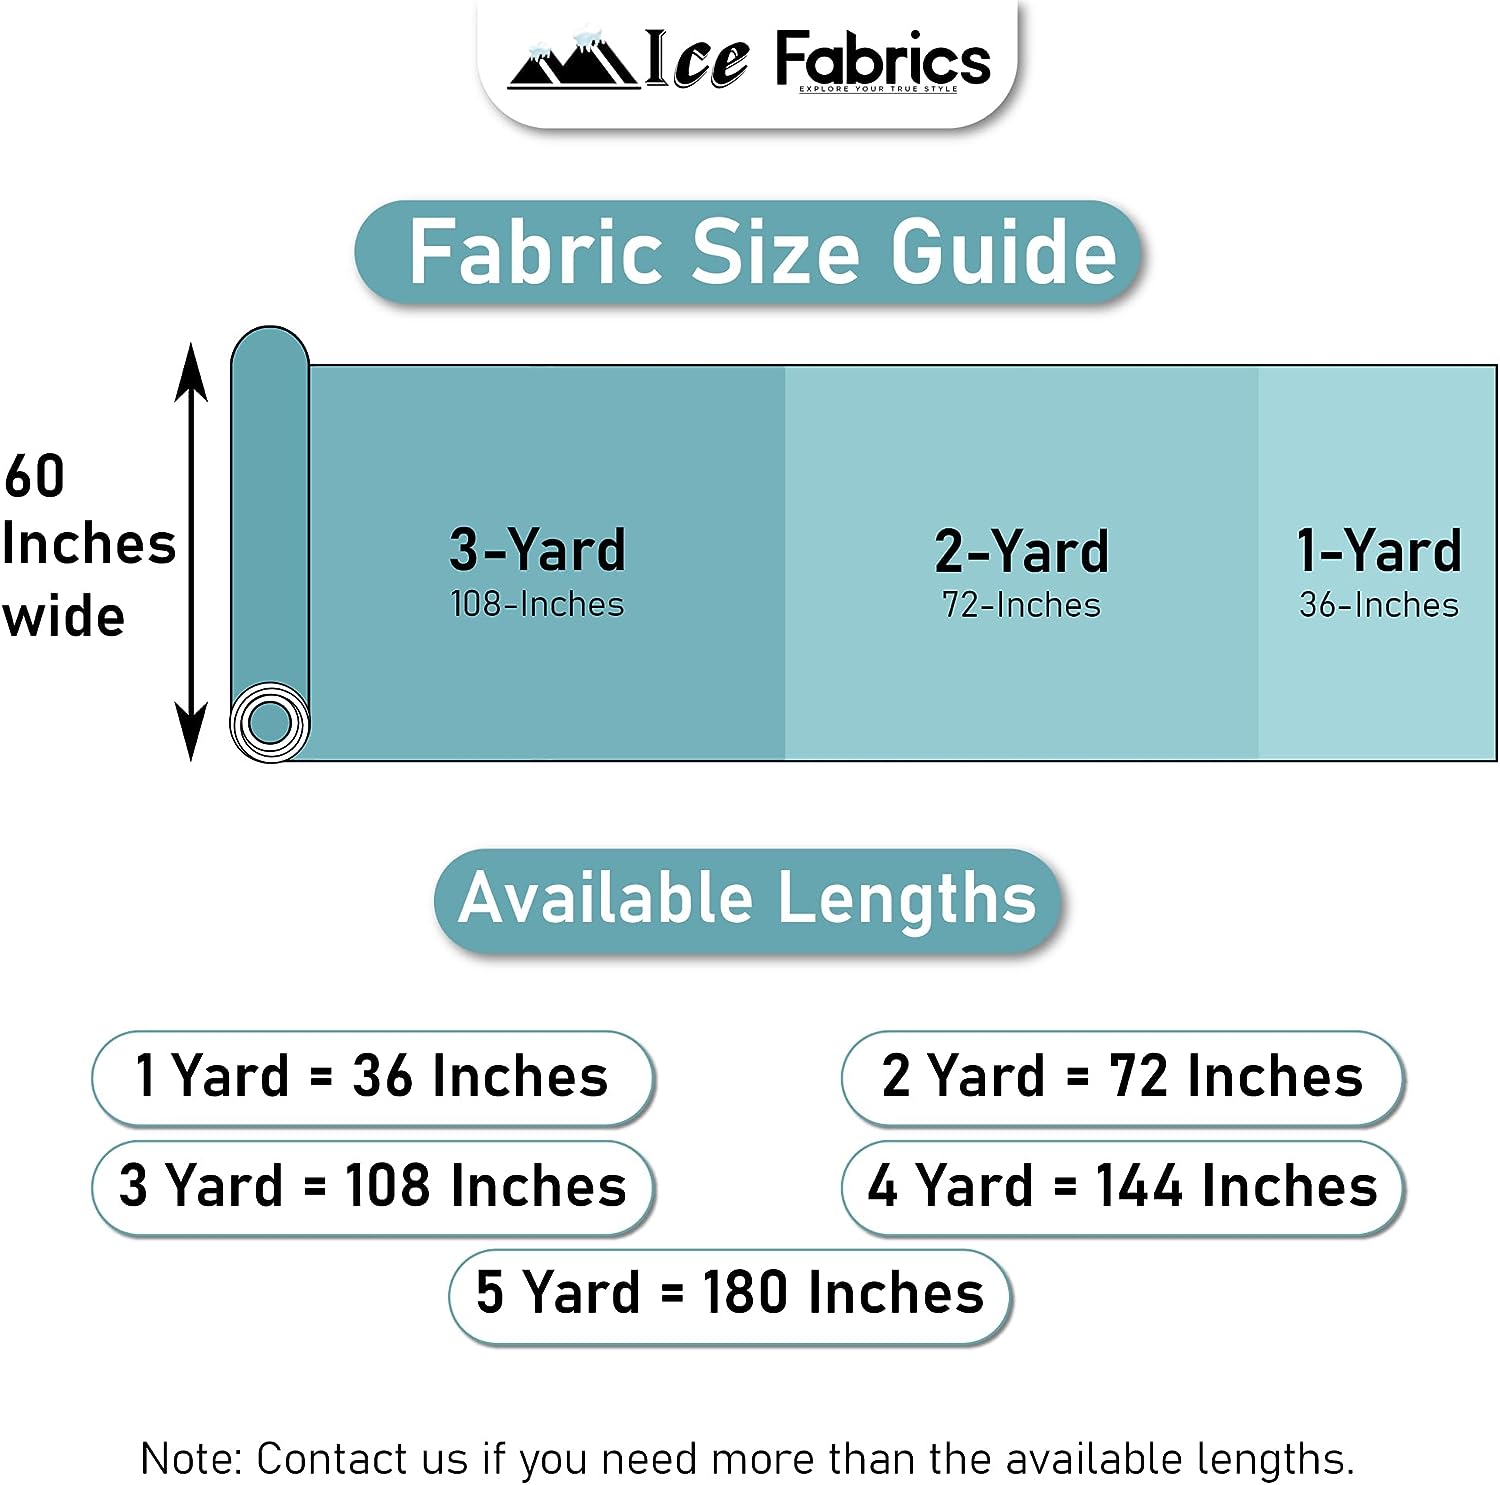 Swimsuit Fabric Nylon Spandex 4 Way Stretch ICE FABRICS